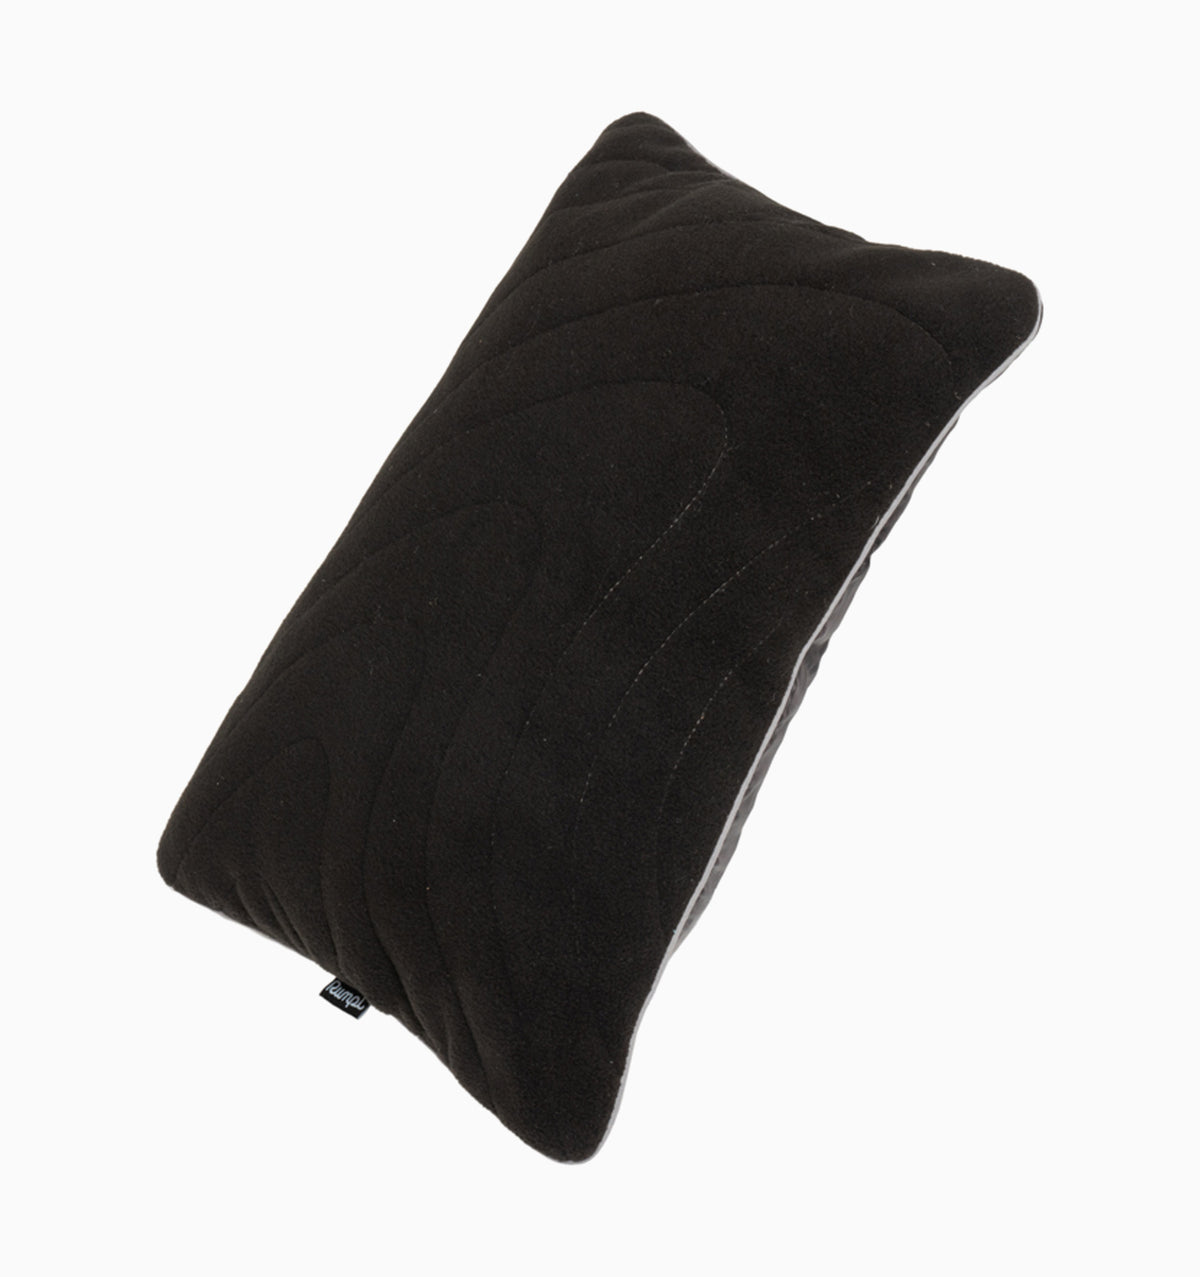 Rumpl Stuffable Pillowcase - Black